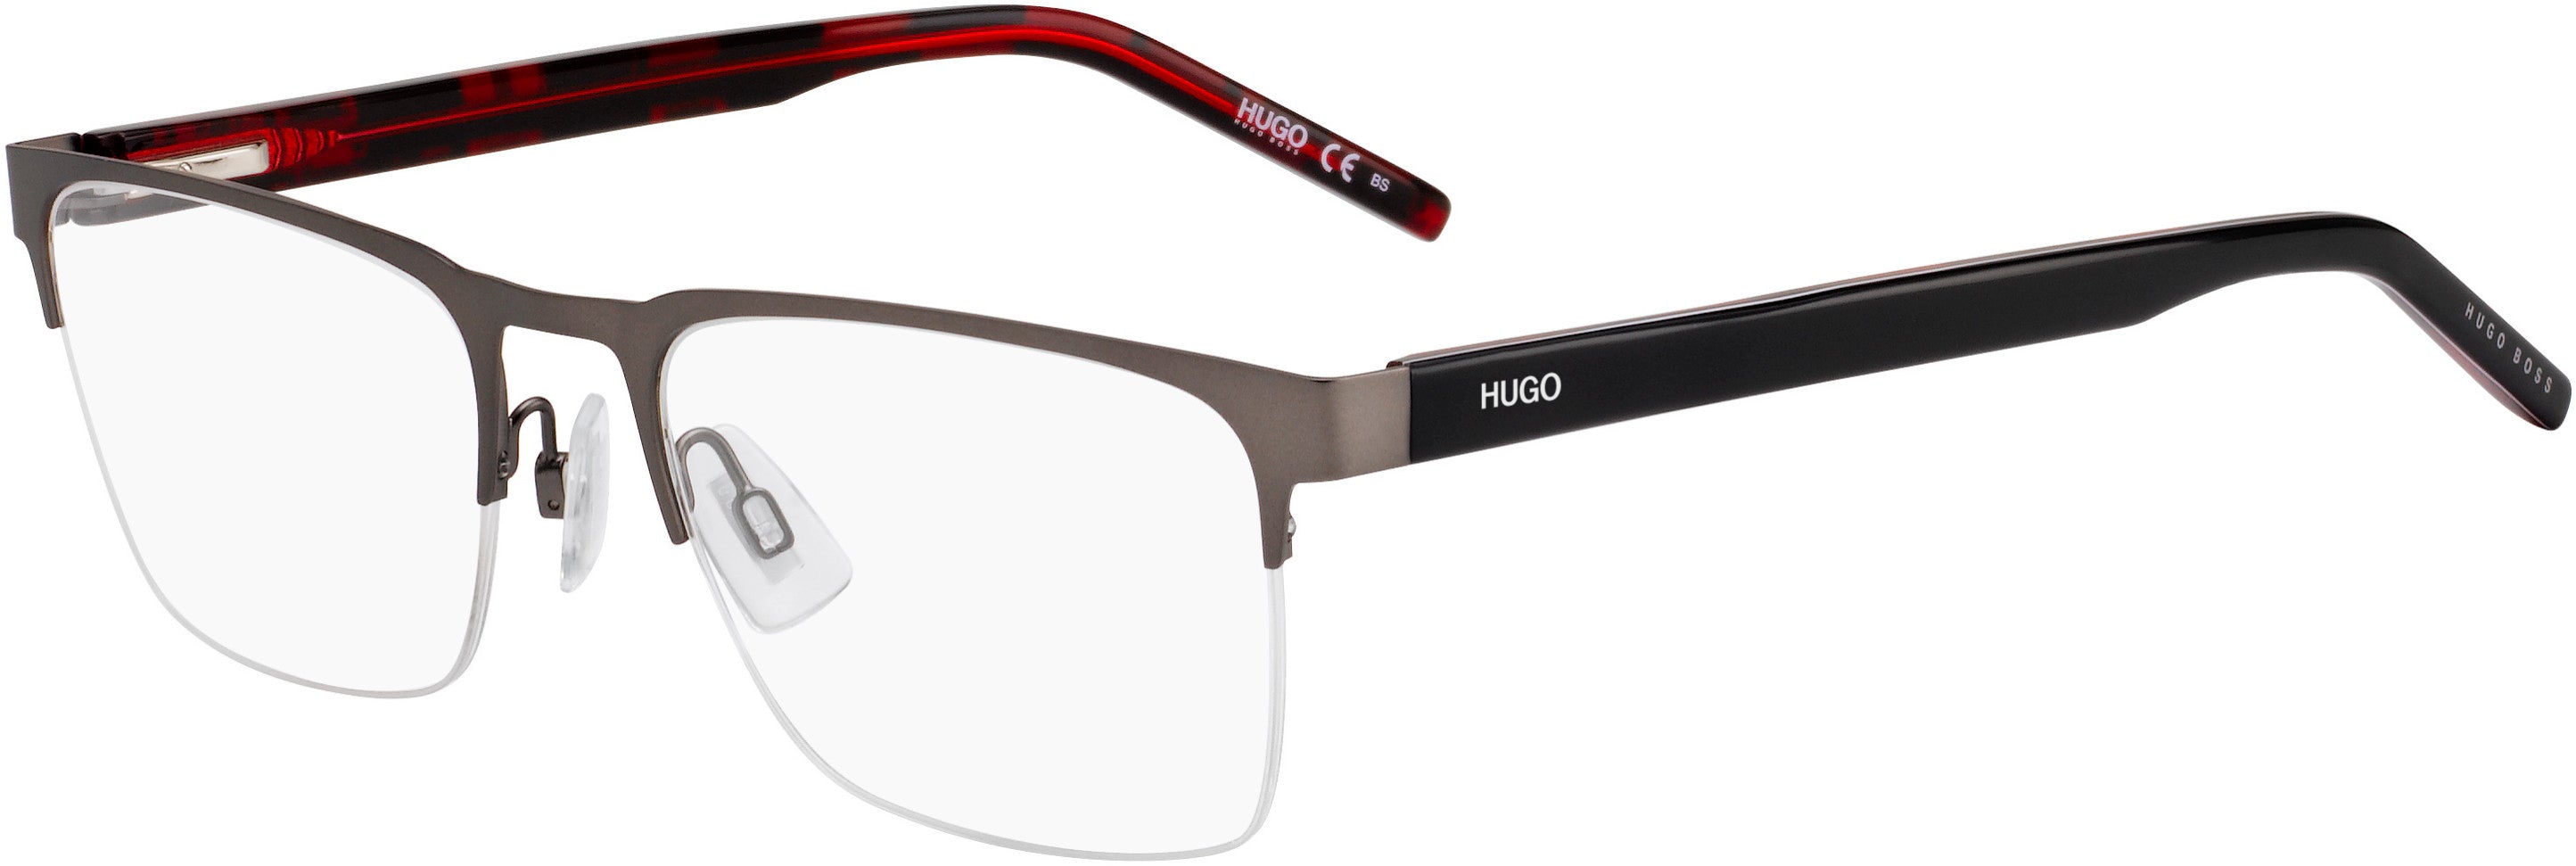 Hugo (hug) Hugo 1076 Rectangular Eyeglasses 0R80-0R80  Semi Matte Dark Ruthenium (00 Demo Lens)